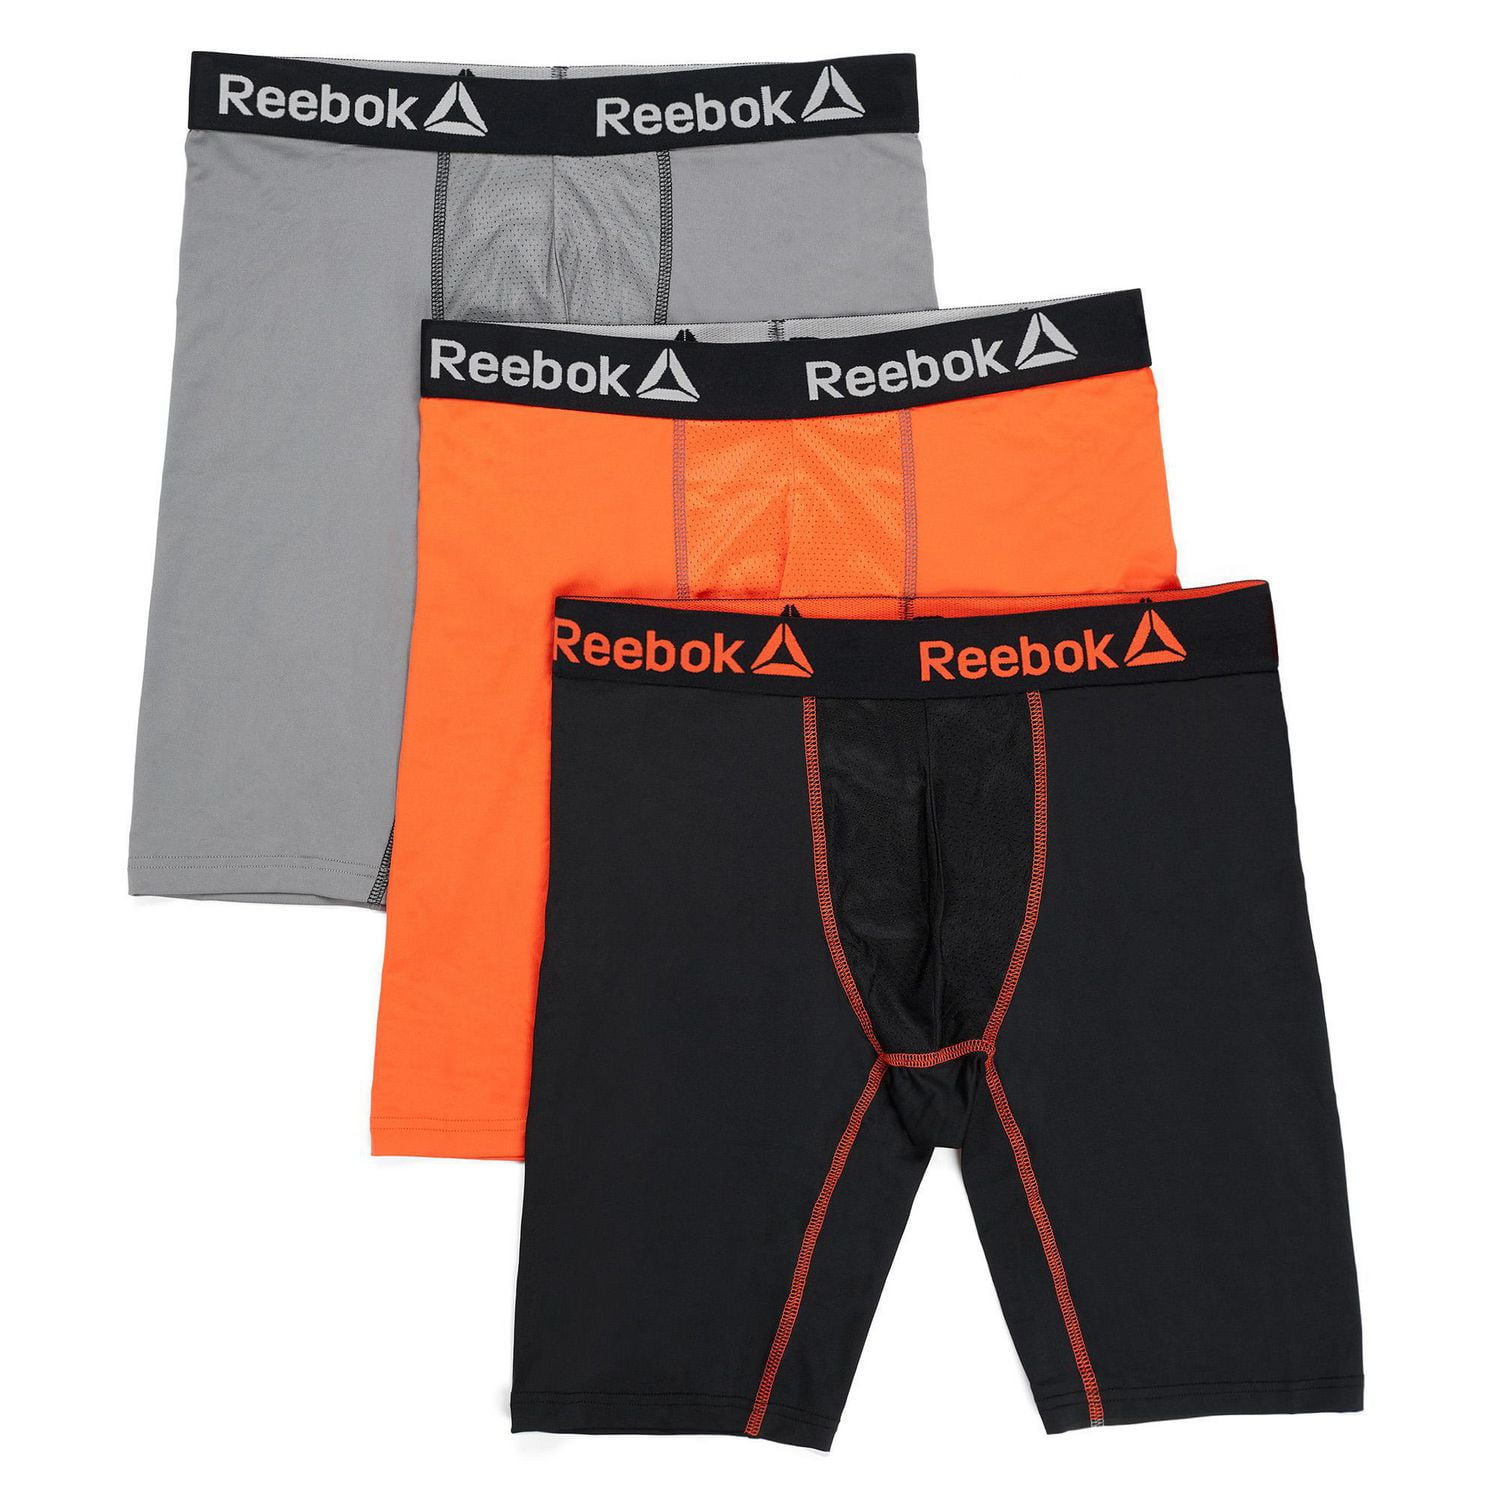 Reebok Men's Underwear – Big and Tall Long Leg India